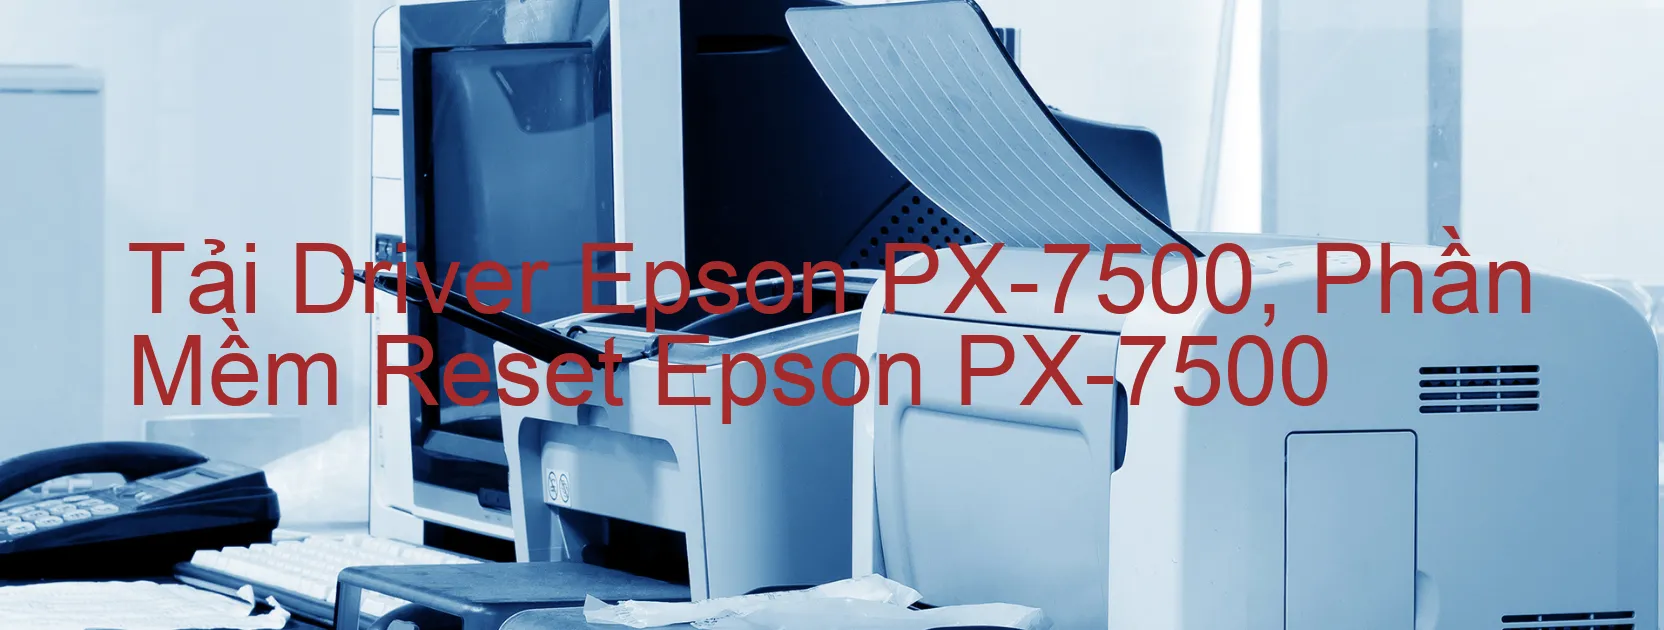 Driver Epson PX-7500, Phần Mềm Reset Epson PX-7500